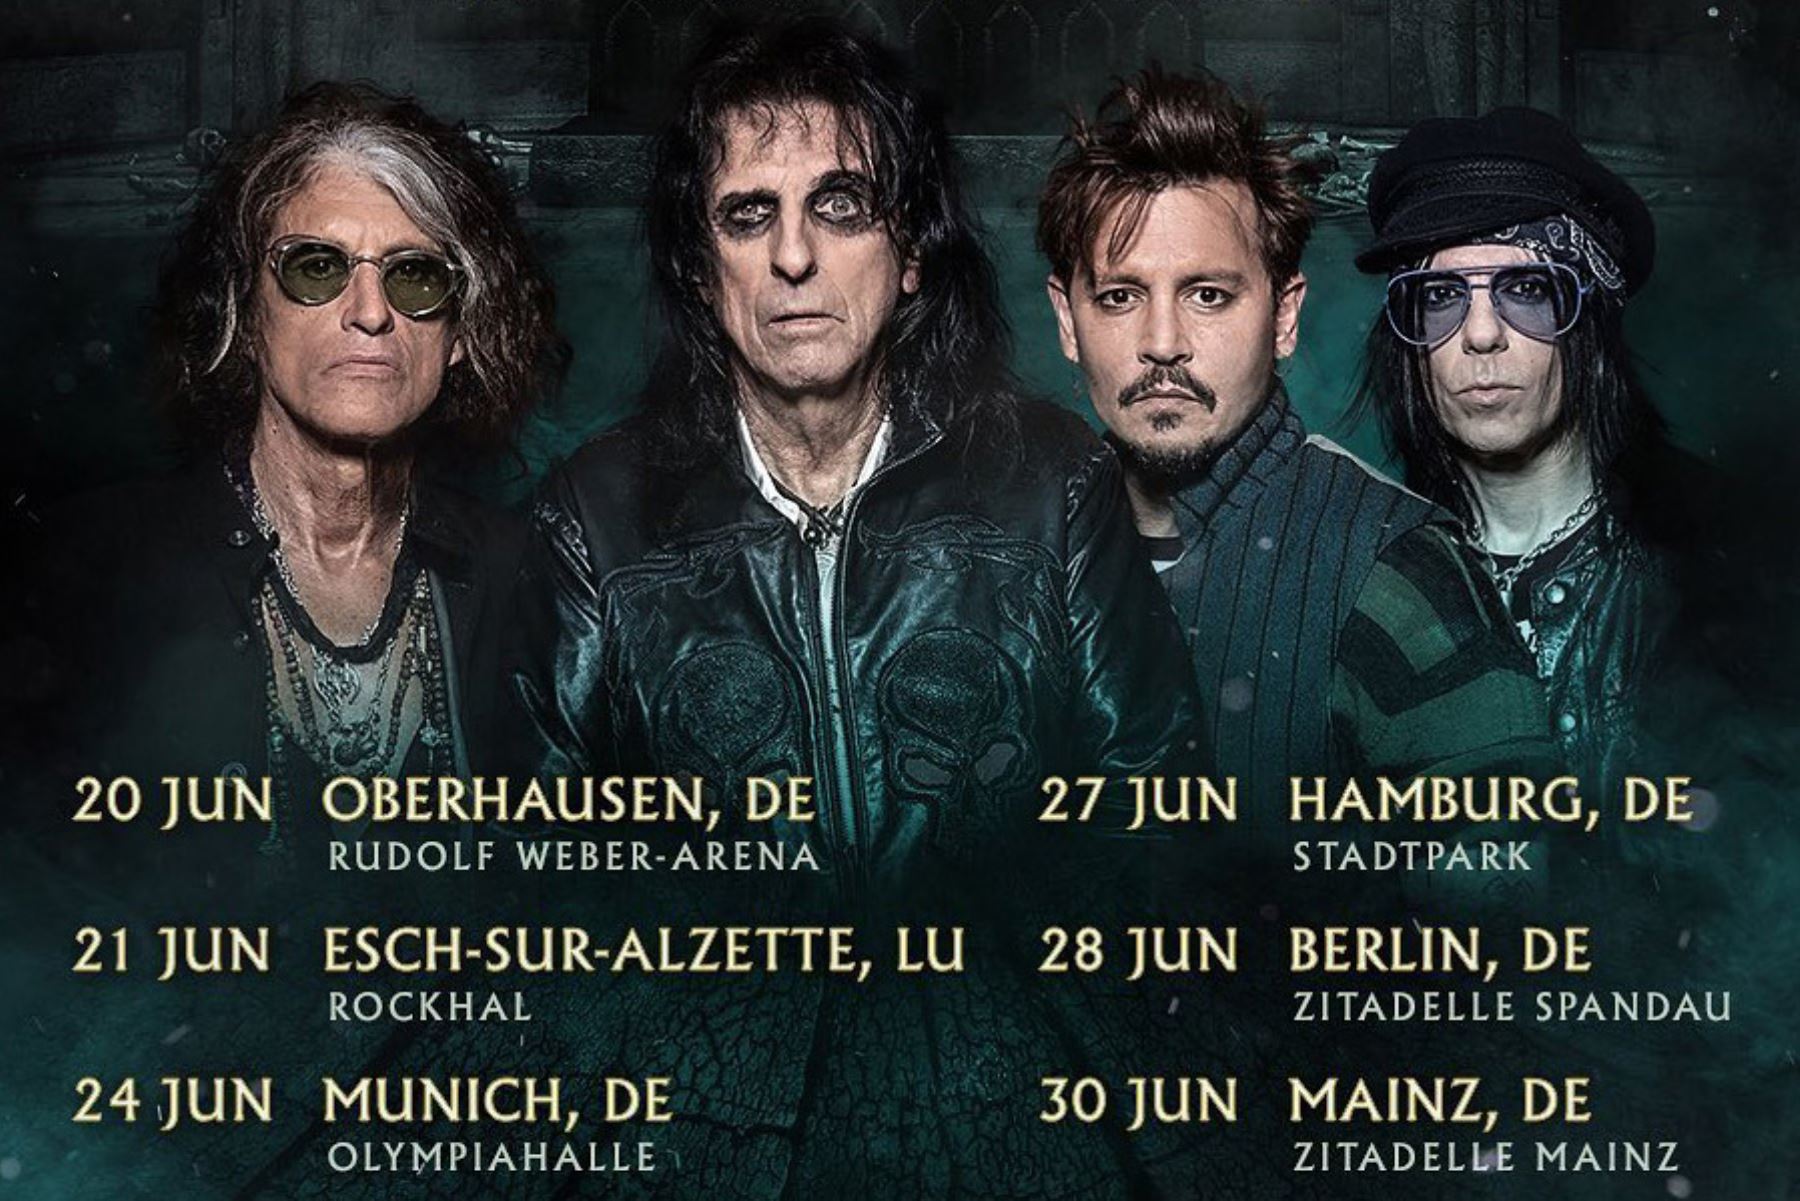 El grupo de rock de Johnny Depp anuncia gira europea en 2023